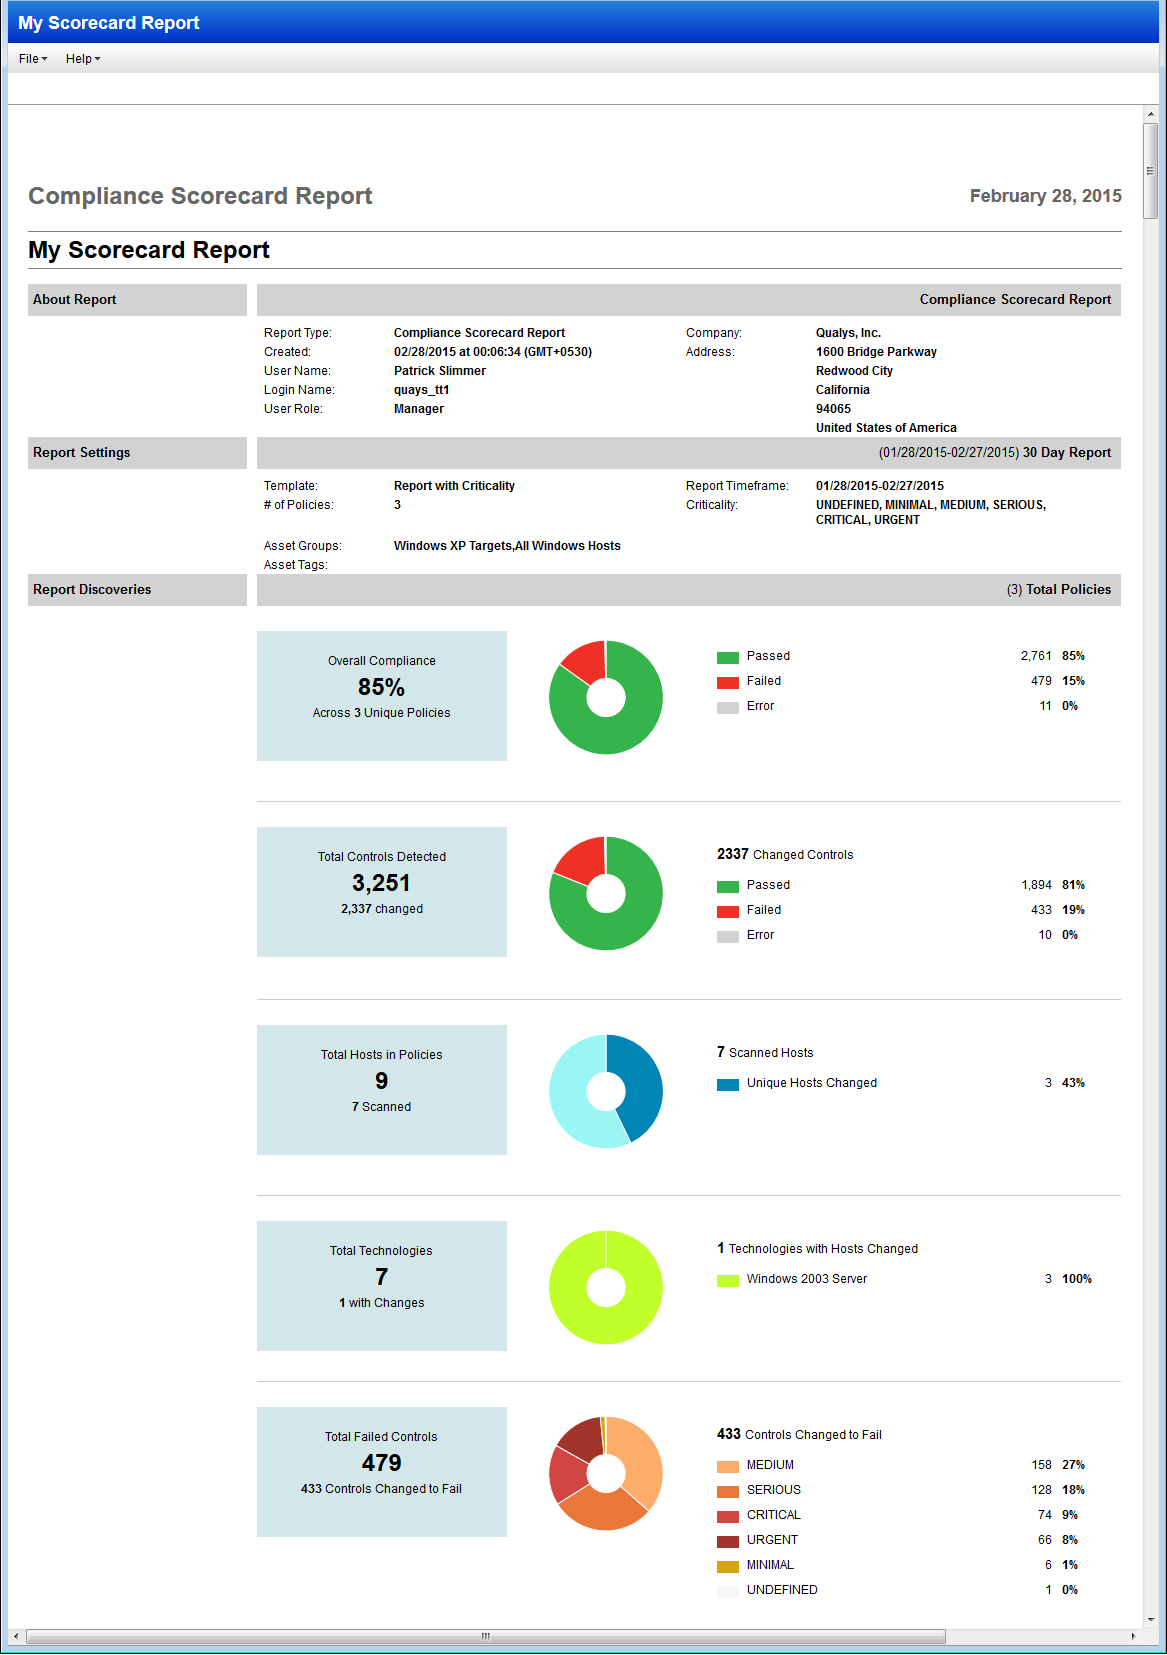 Sample Compliance Scorecard Report - Report Summary section